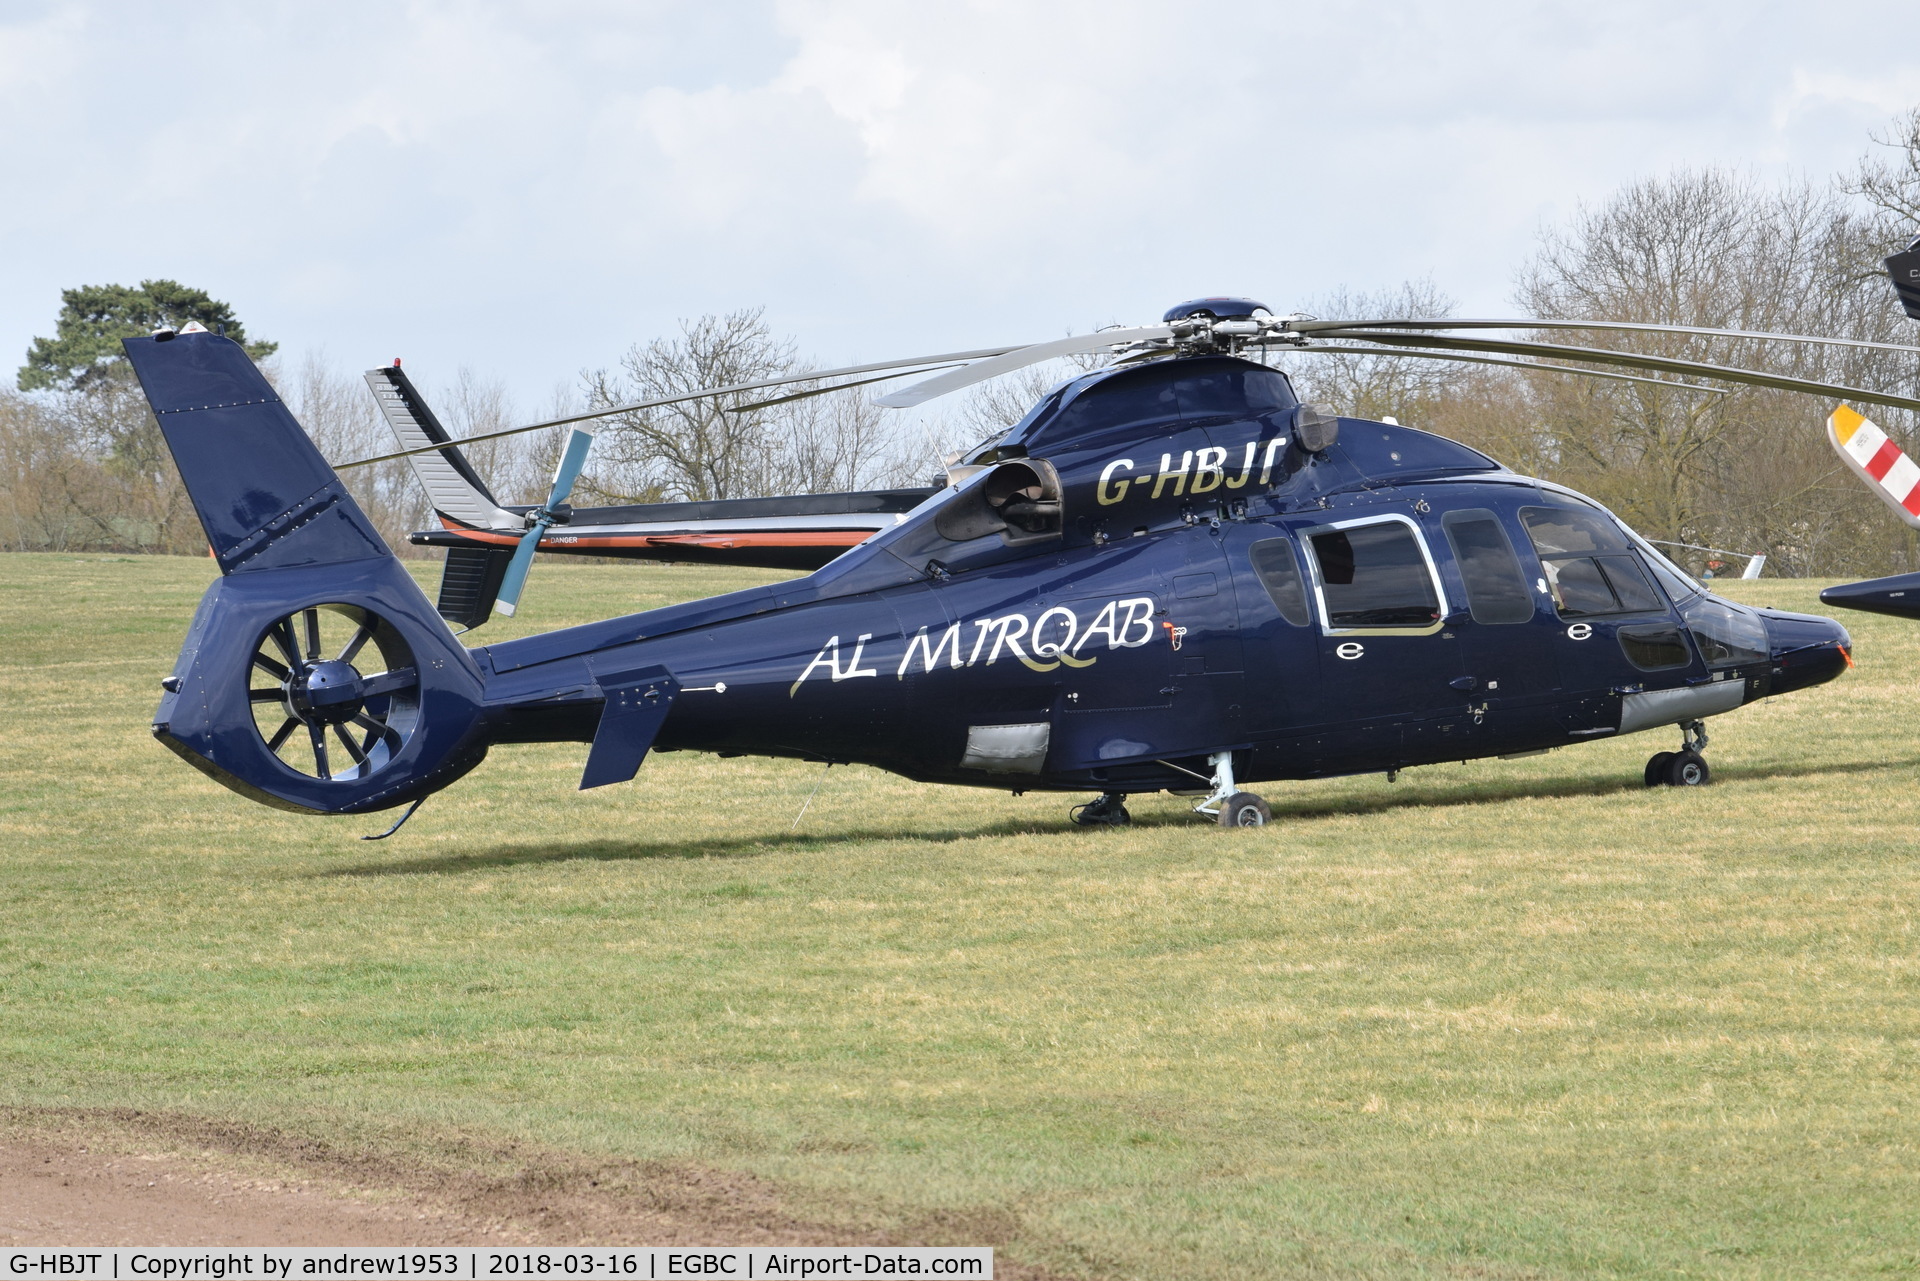 G-HBJT, 2008 Eurocopter EC-155B-1 C/N 6807, G-HBJT at Cheltenham Racecourse.